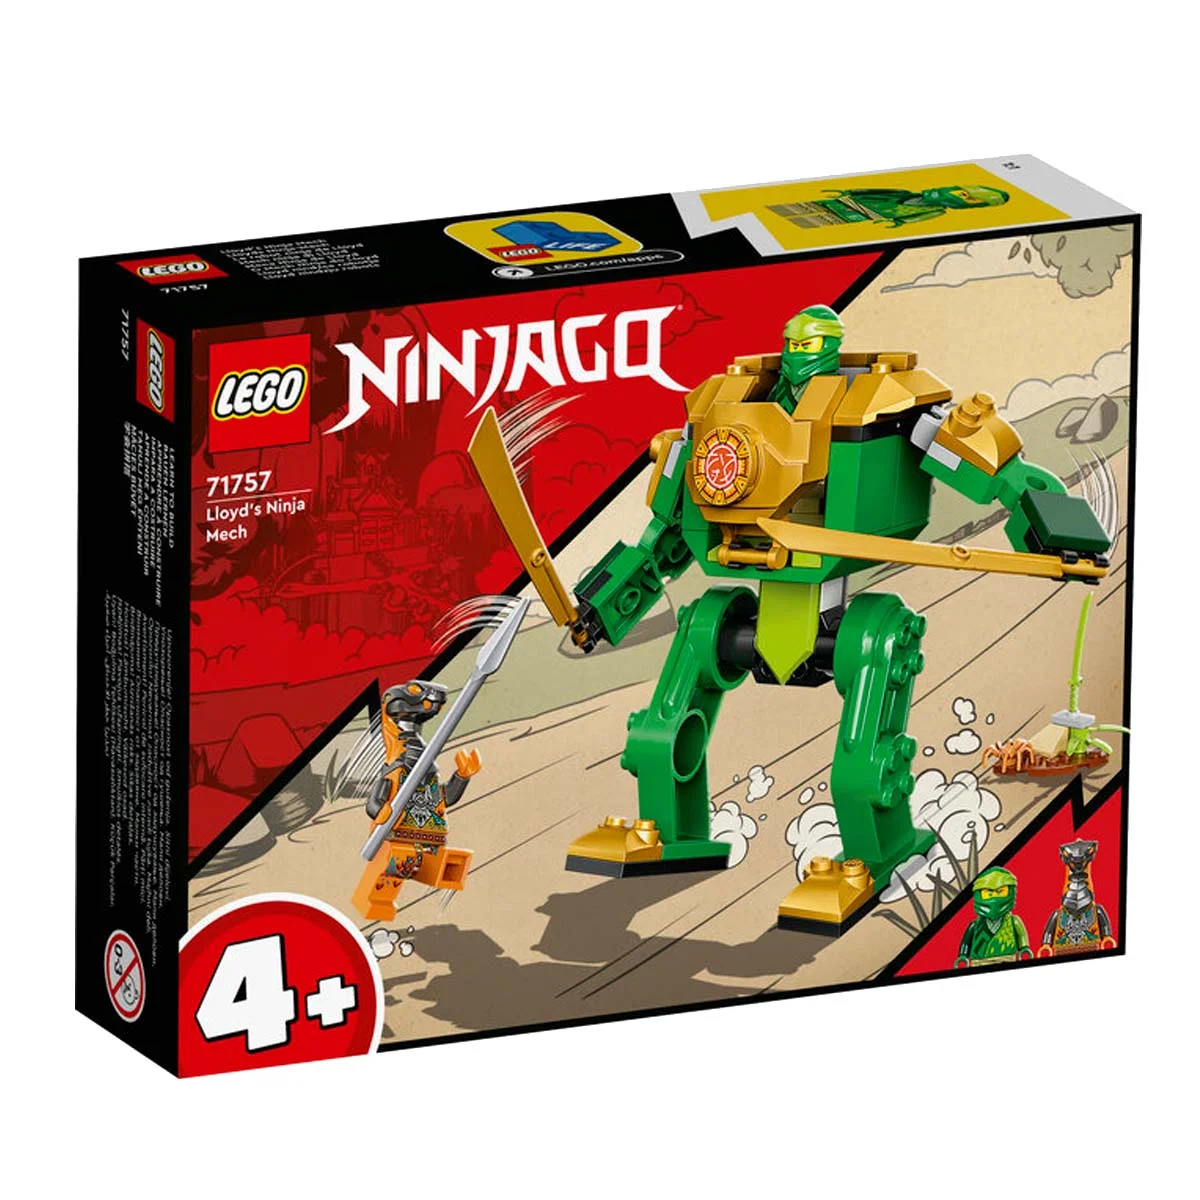 LEGO NINJAGO Lloyds ninjarobot online kun kr. 89.95